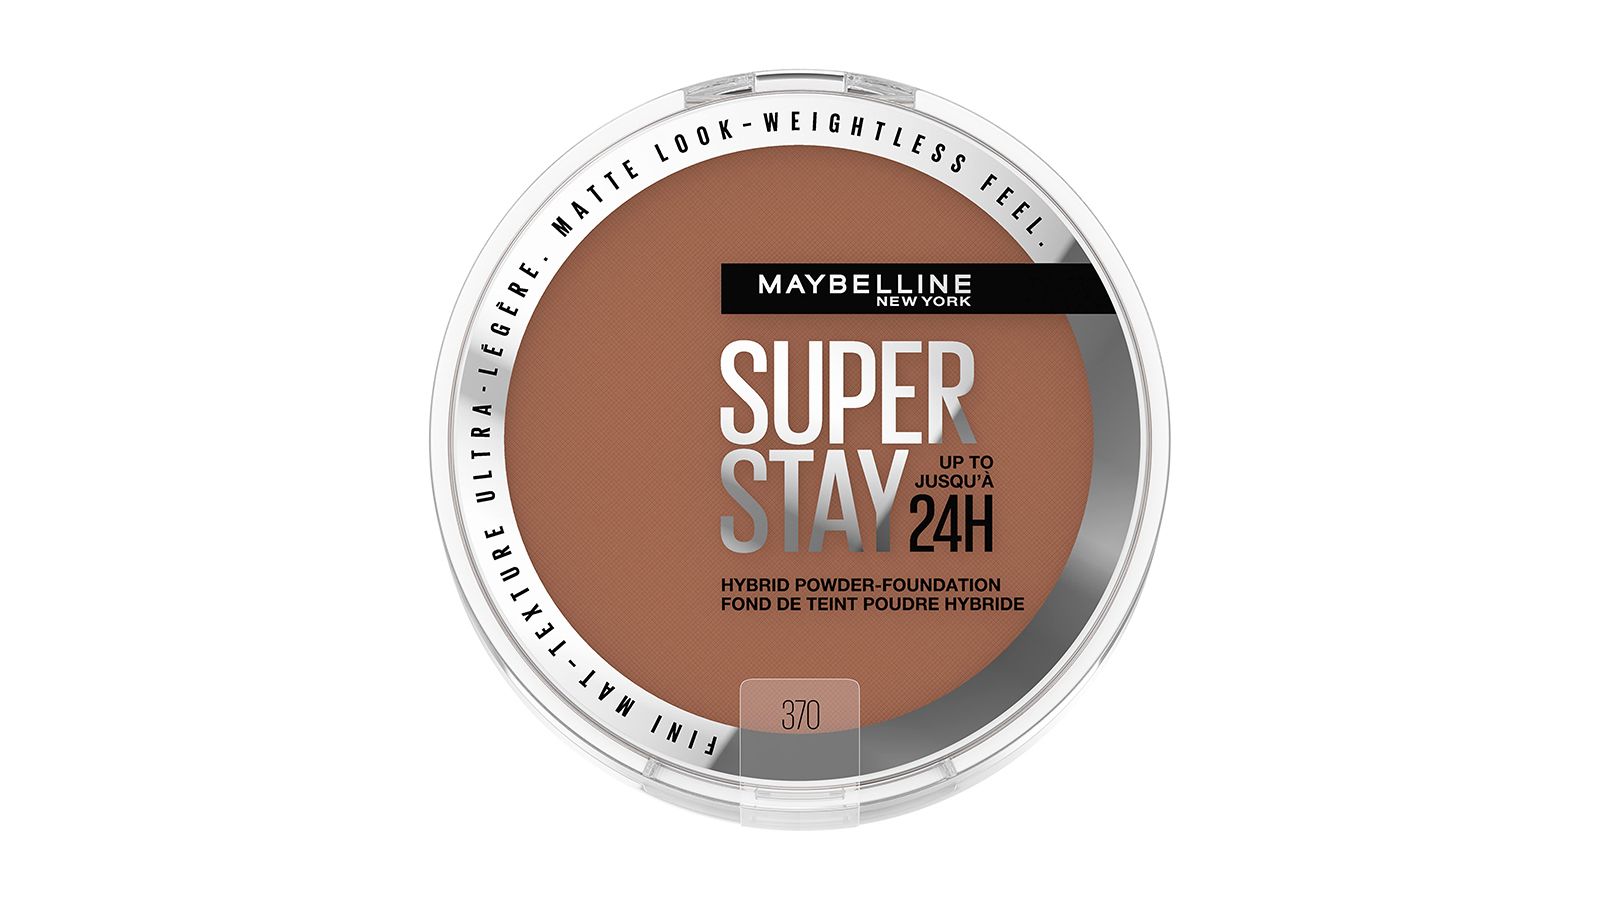 NEW Maybelline Super Stay 24HR Hybrid Powder Foundation // All Day Wear  Test & Review 